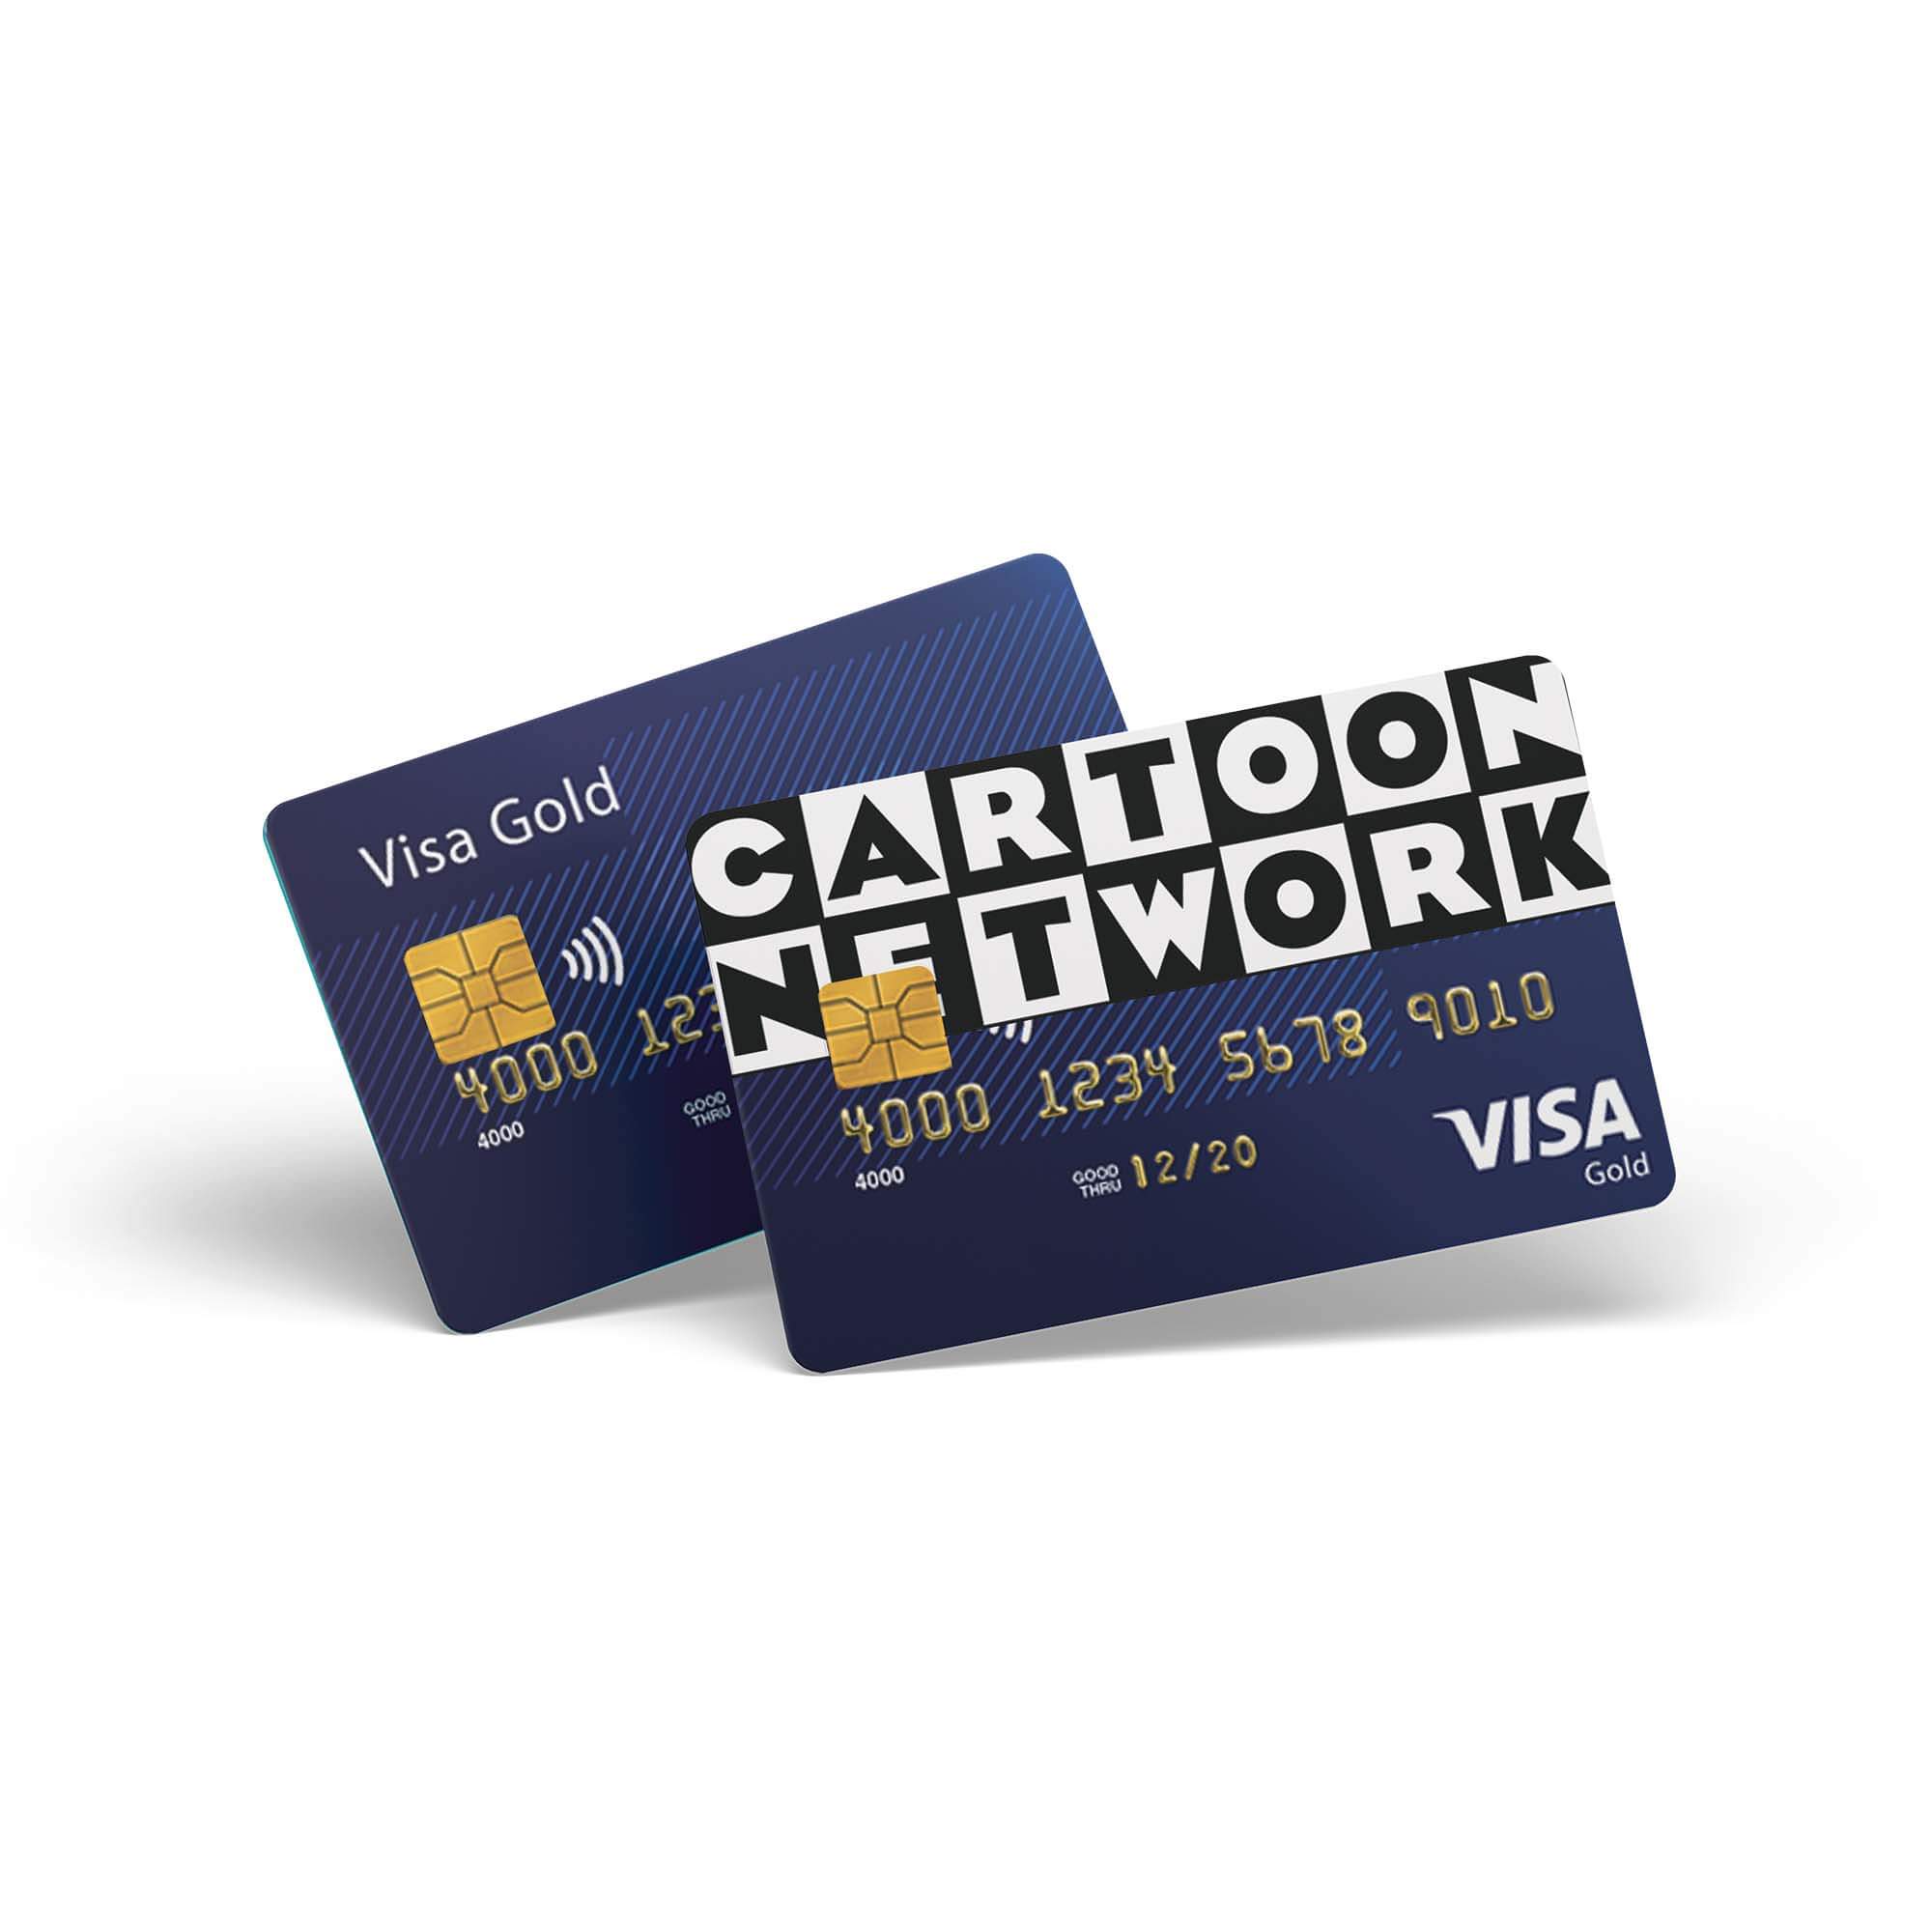 Cartoon network CARD STICKER